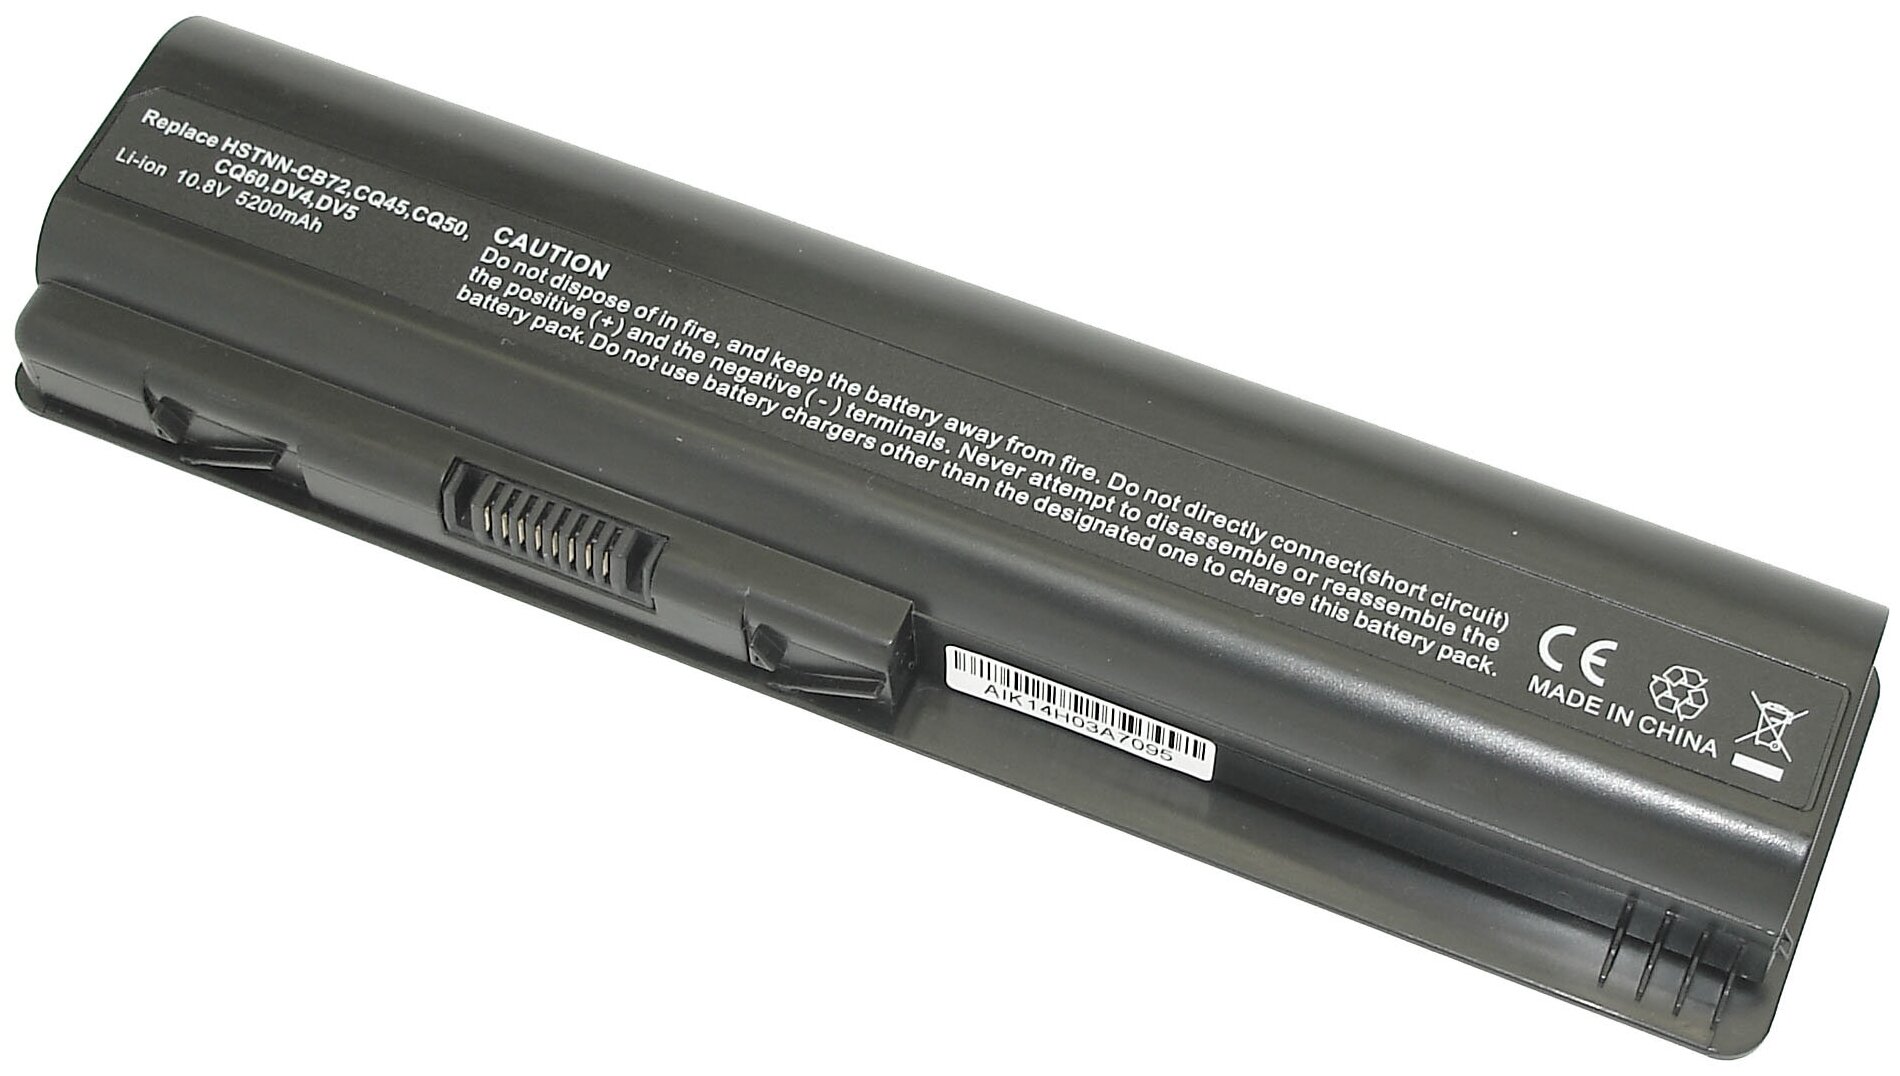 Аккумулятор OEM (совместимый с HSTNN-XB79, HSTNN-Q34C) для ноутбука HP Pavilion DV5-1000 10.8V 4400mAh черный